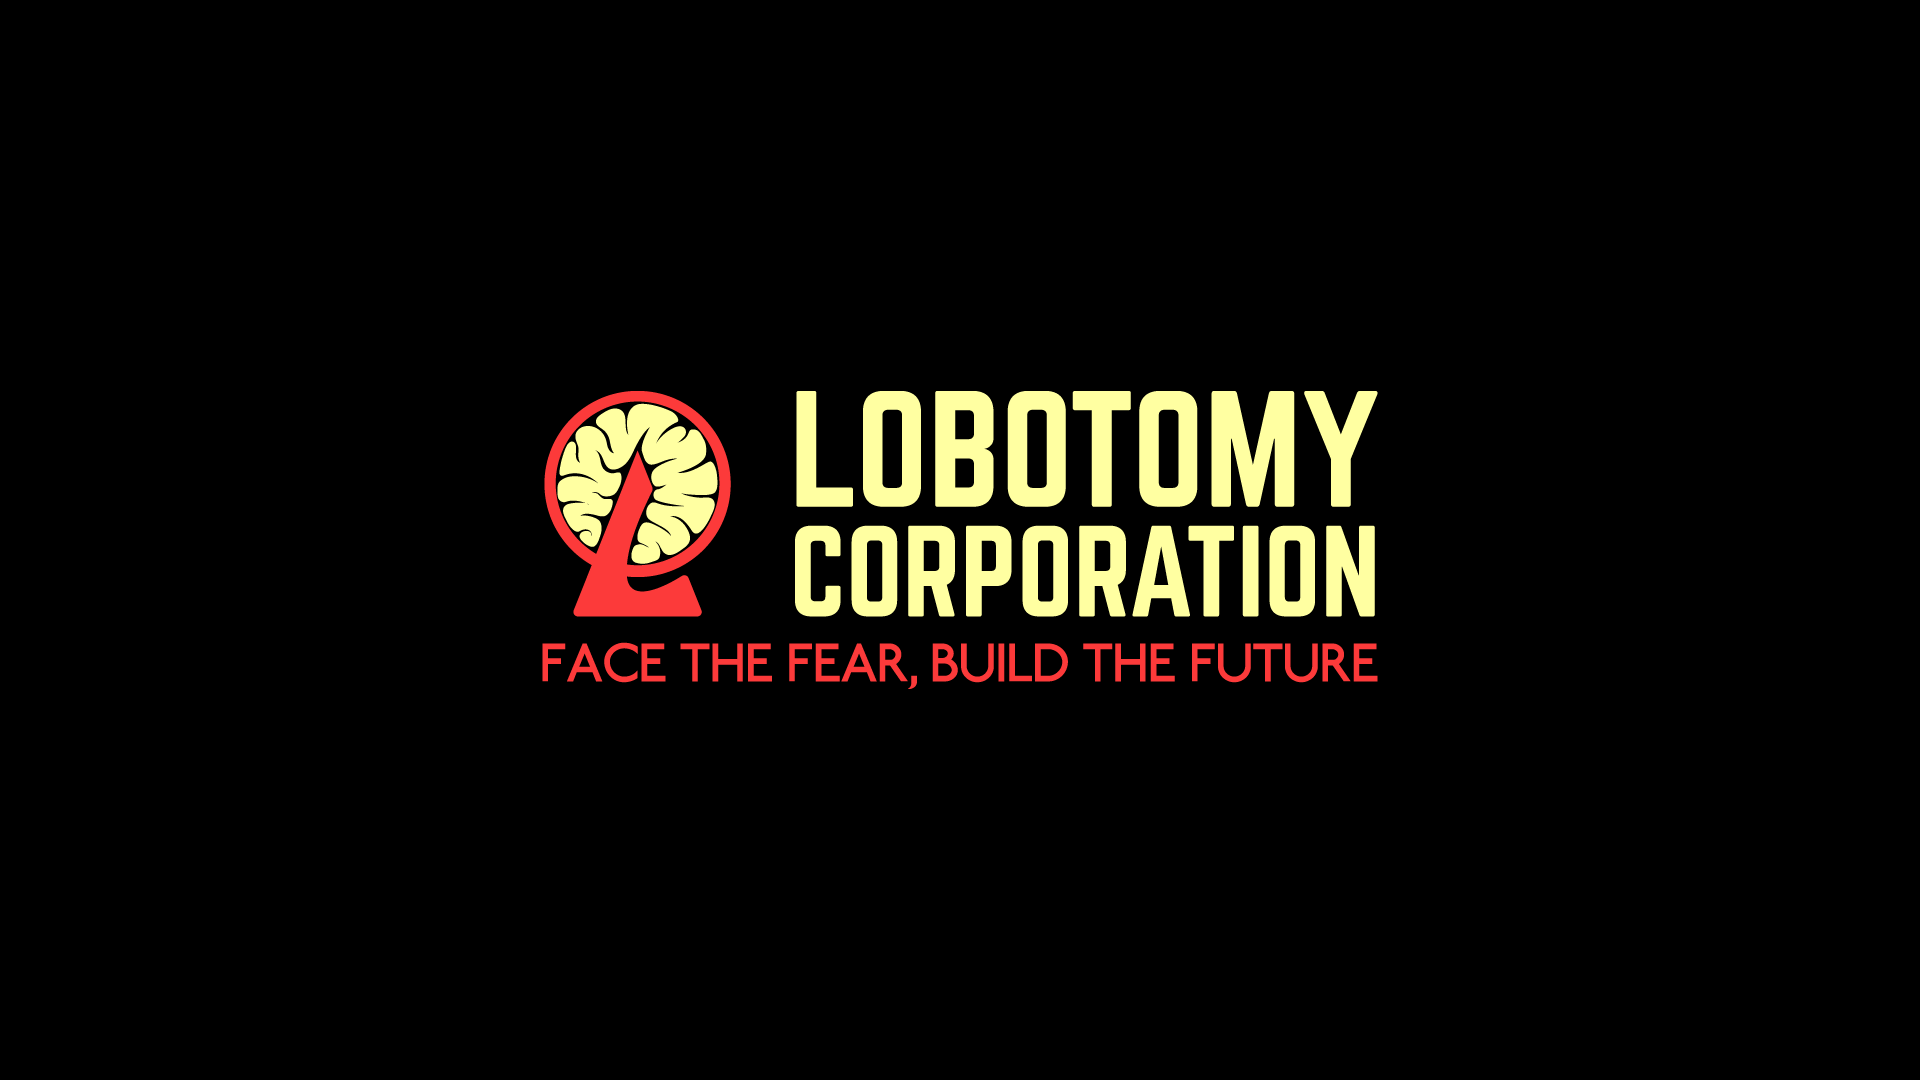 Lobotomy Corporation. Monster Management Simulation